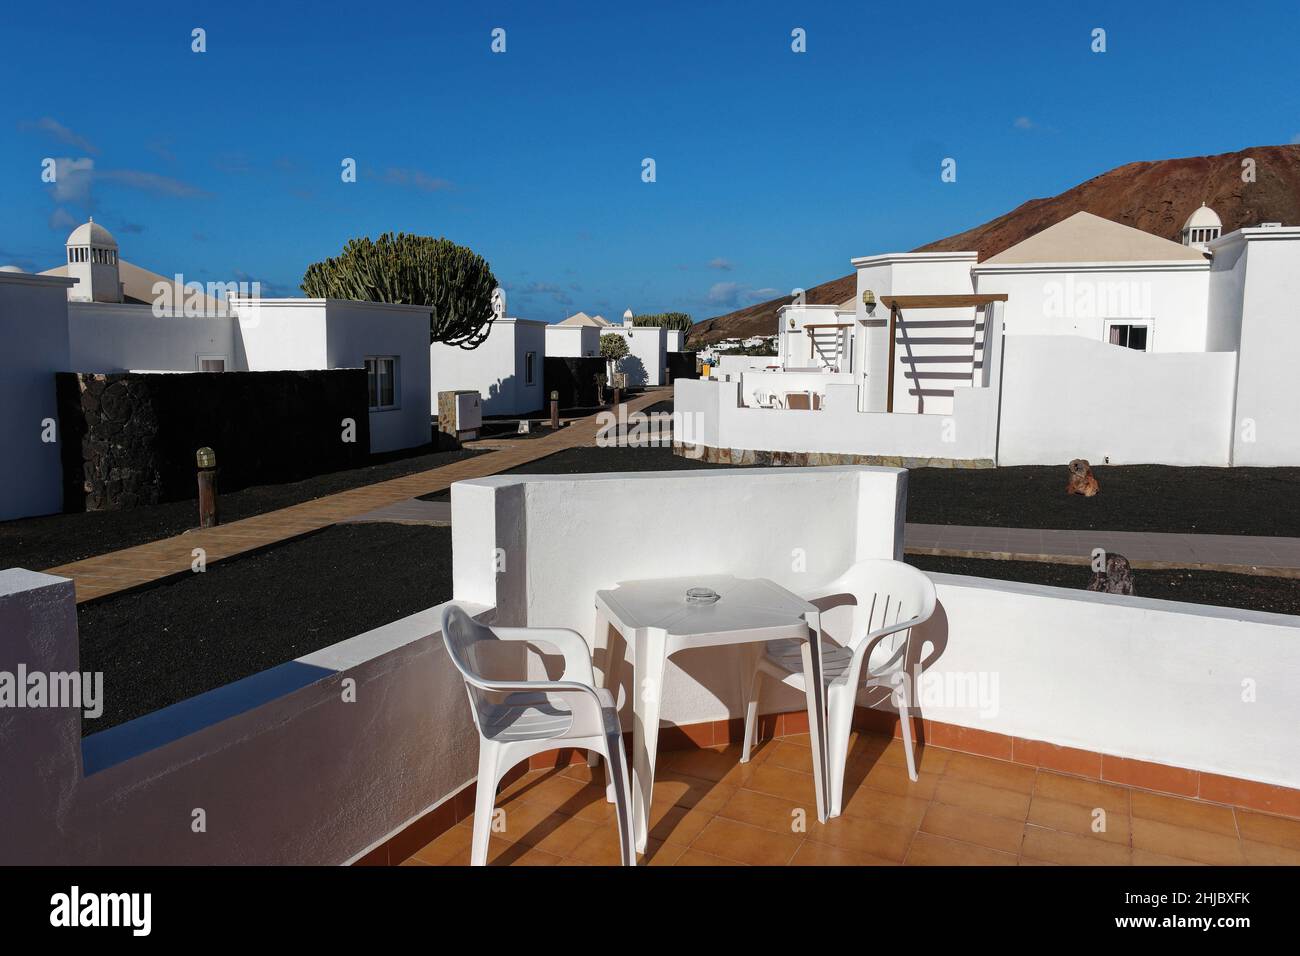 Lanzarote, Canary Islands, Stock Photo